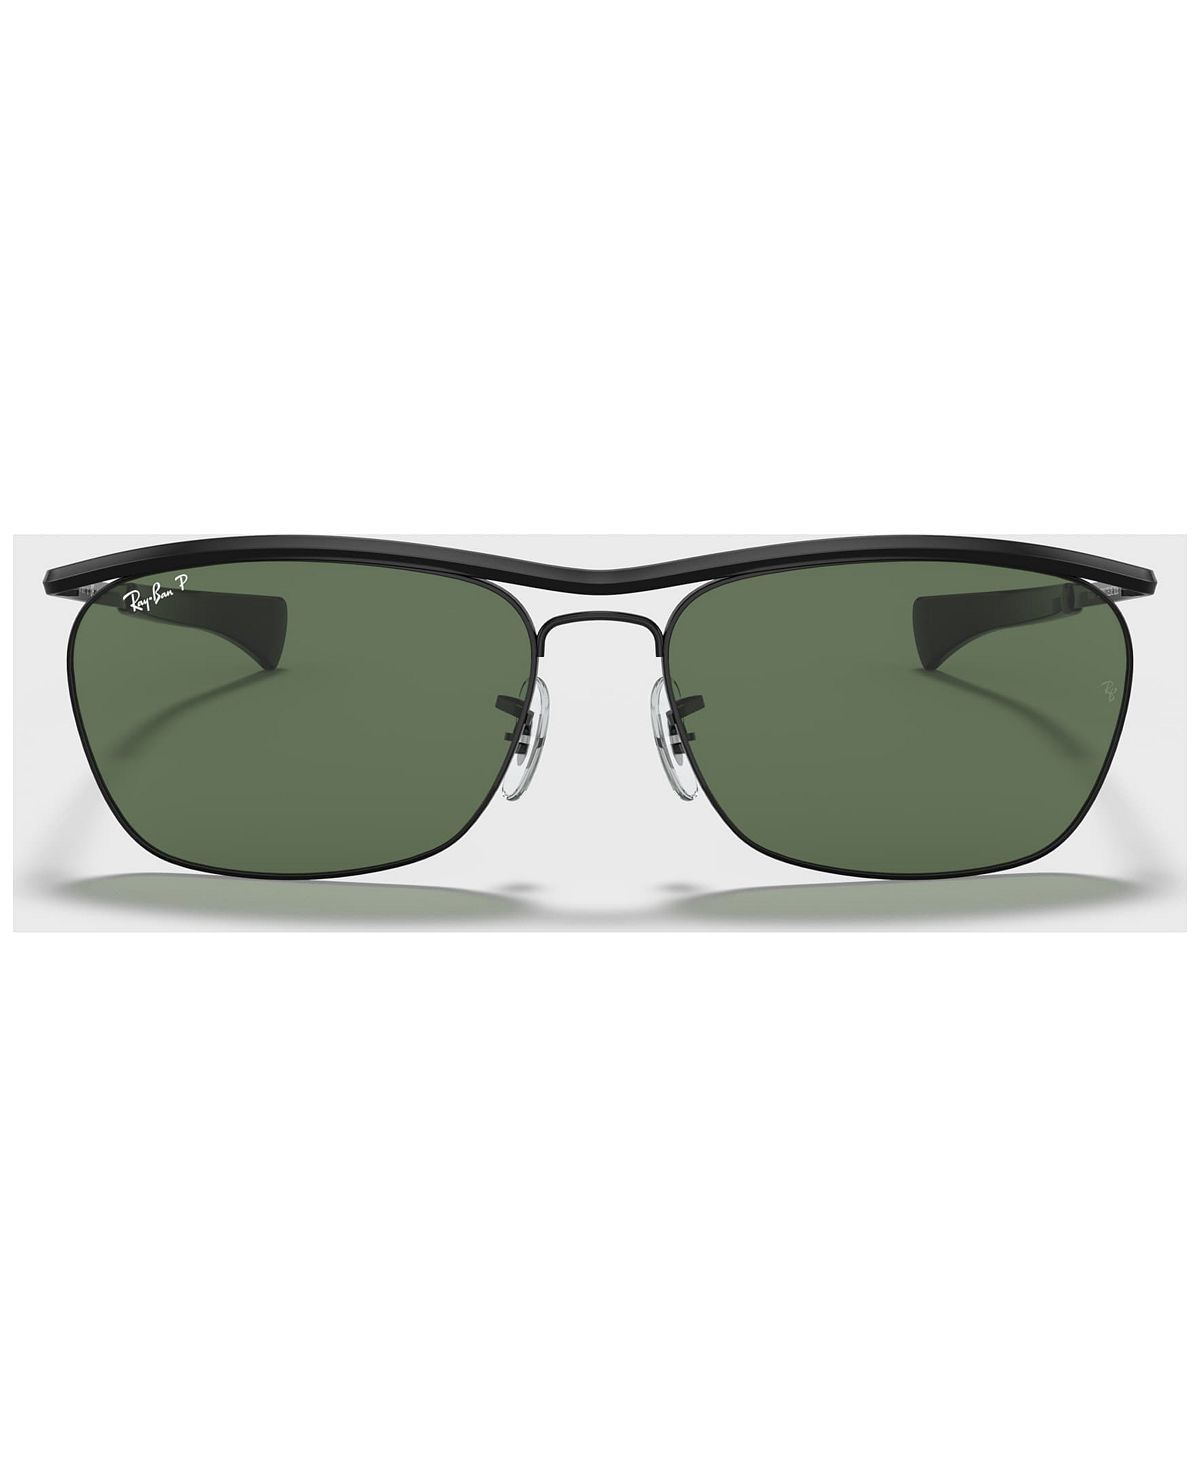 Поляризованные солнцезащитные очки унисекс, RB3619 Ray-Ban солнцезащитные очки utilizer columbia цвет shiny black green green mirr